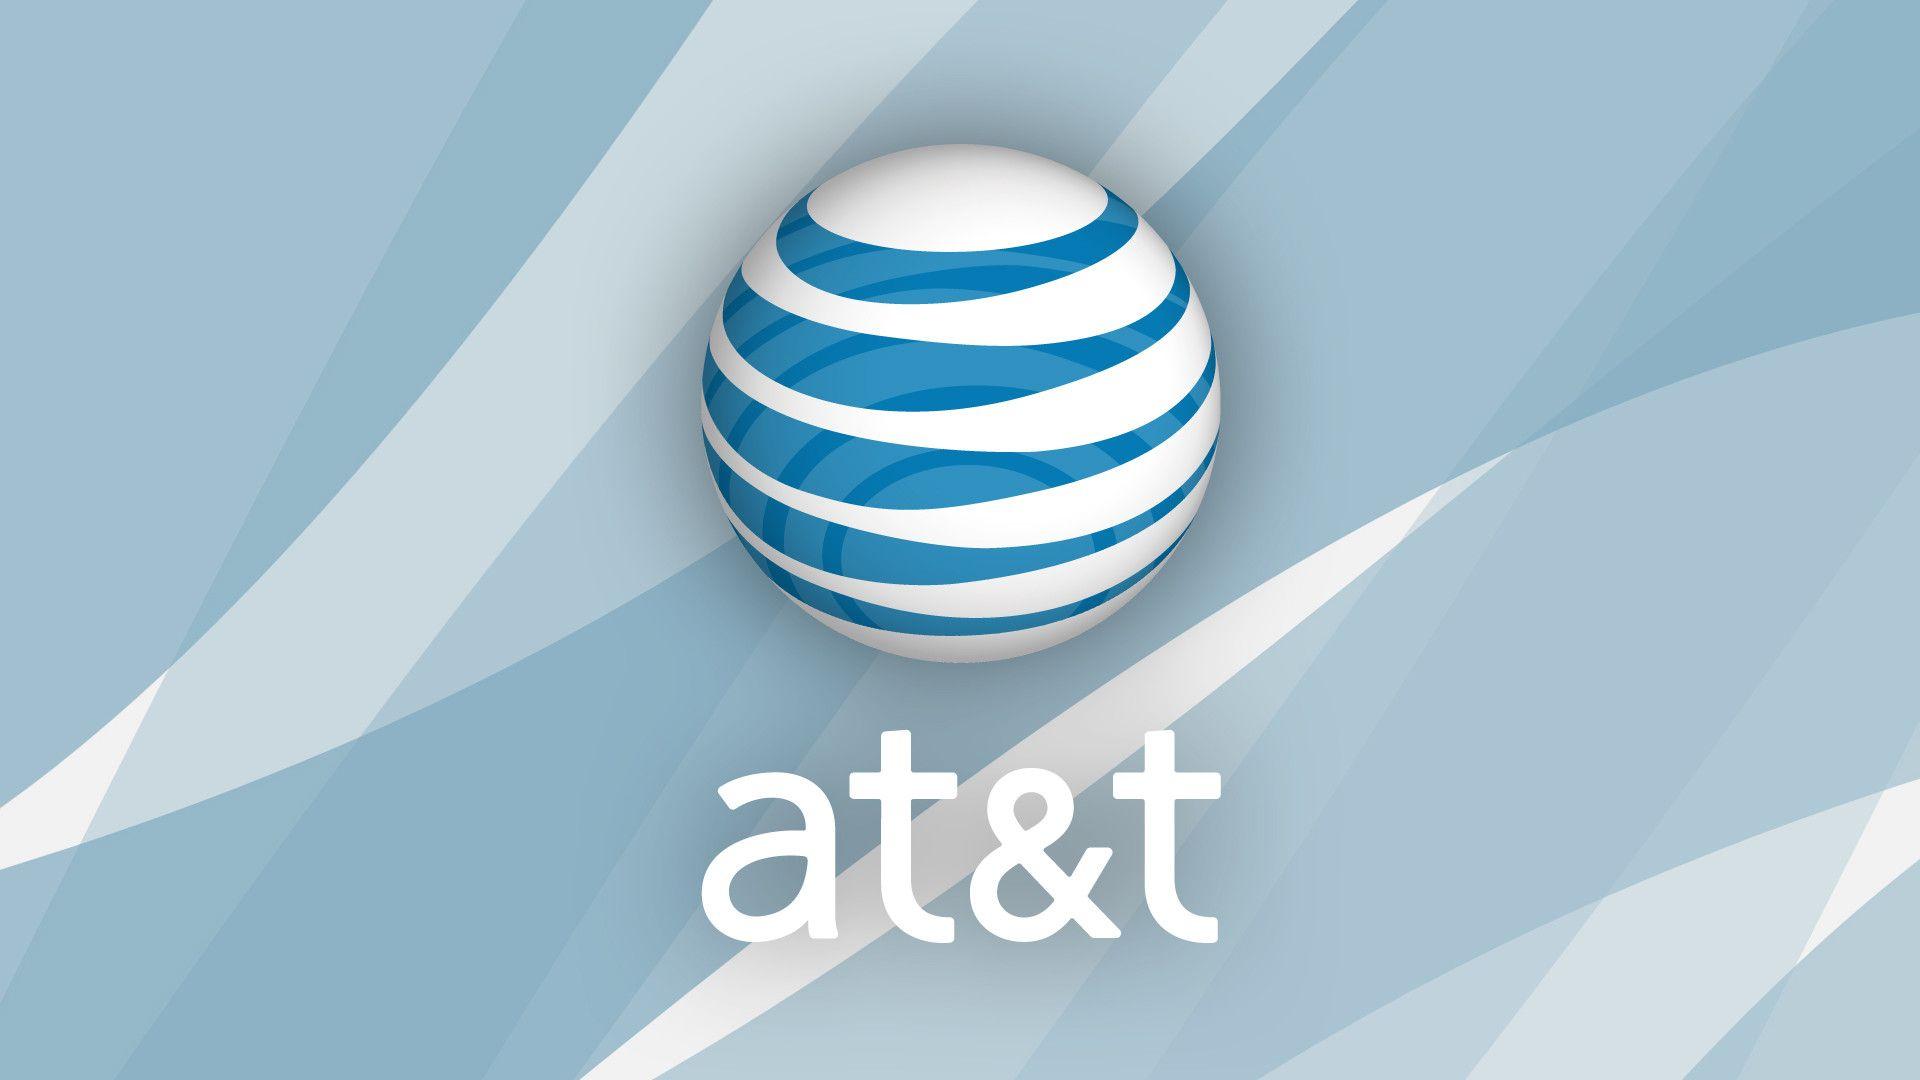 AT&T Wallpapers - Top Free AT&T